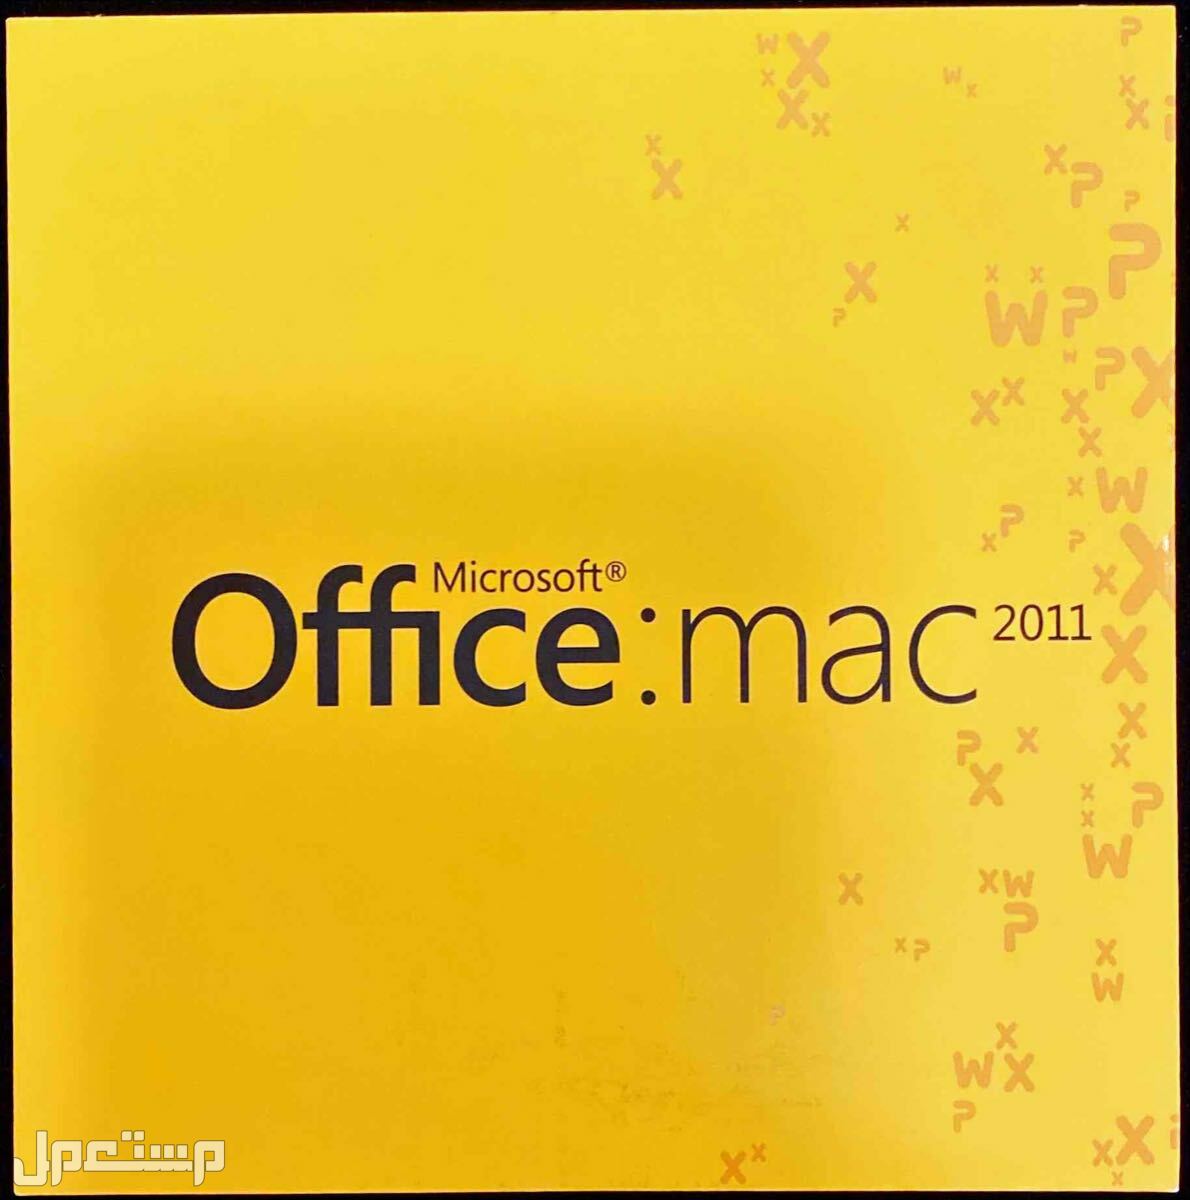 mac book pro 13" 2011 year model